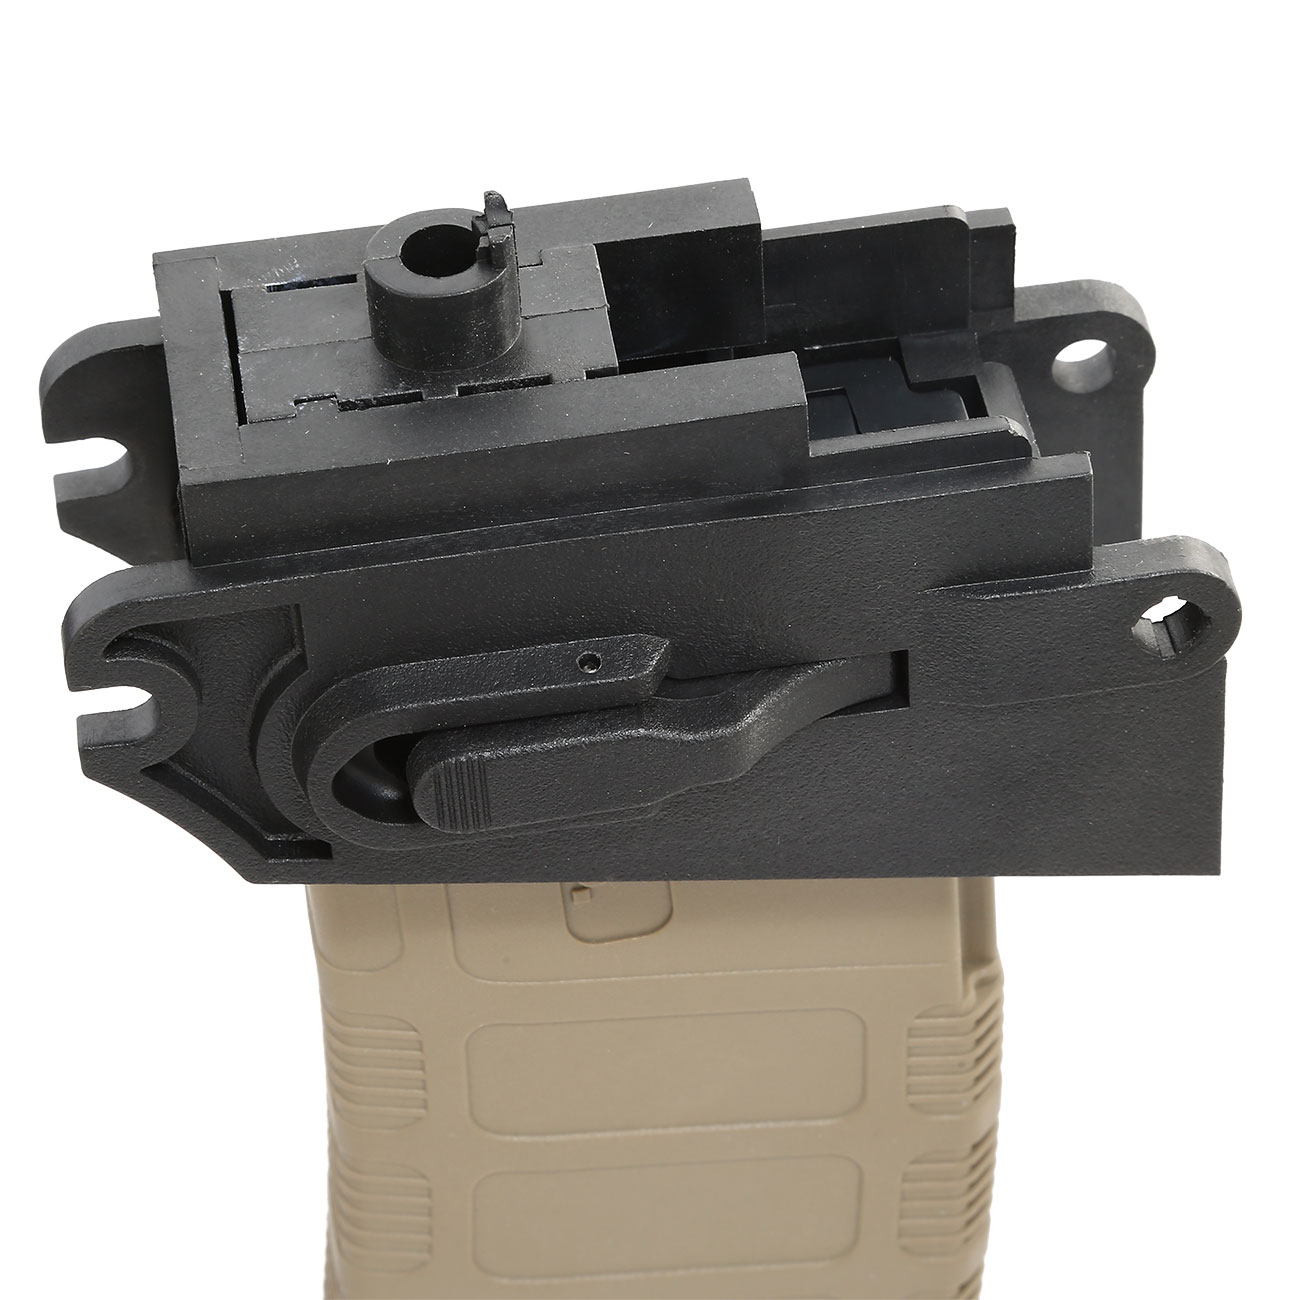 Arma Tech M4 Magazin Adapter / Conversion Kit f. G36 AEG / S-AEG Gewehre Bild 1